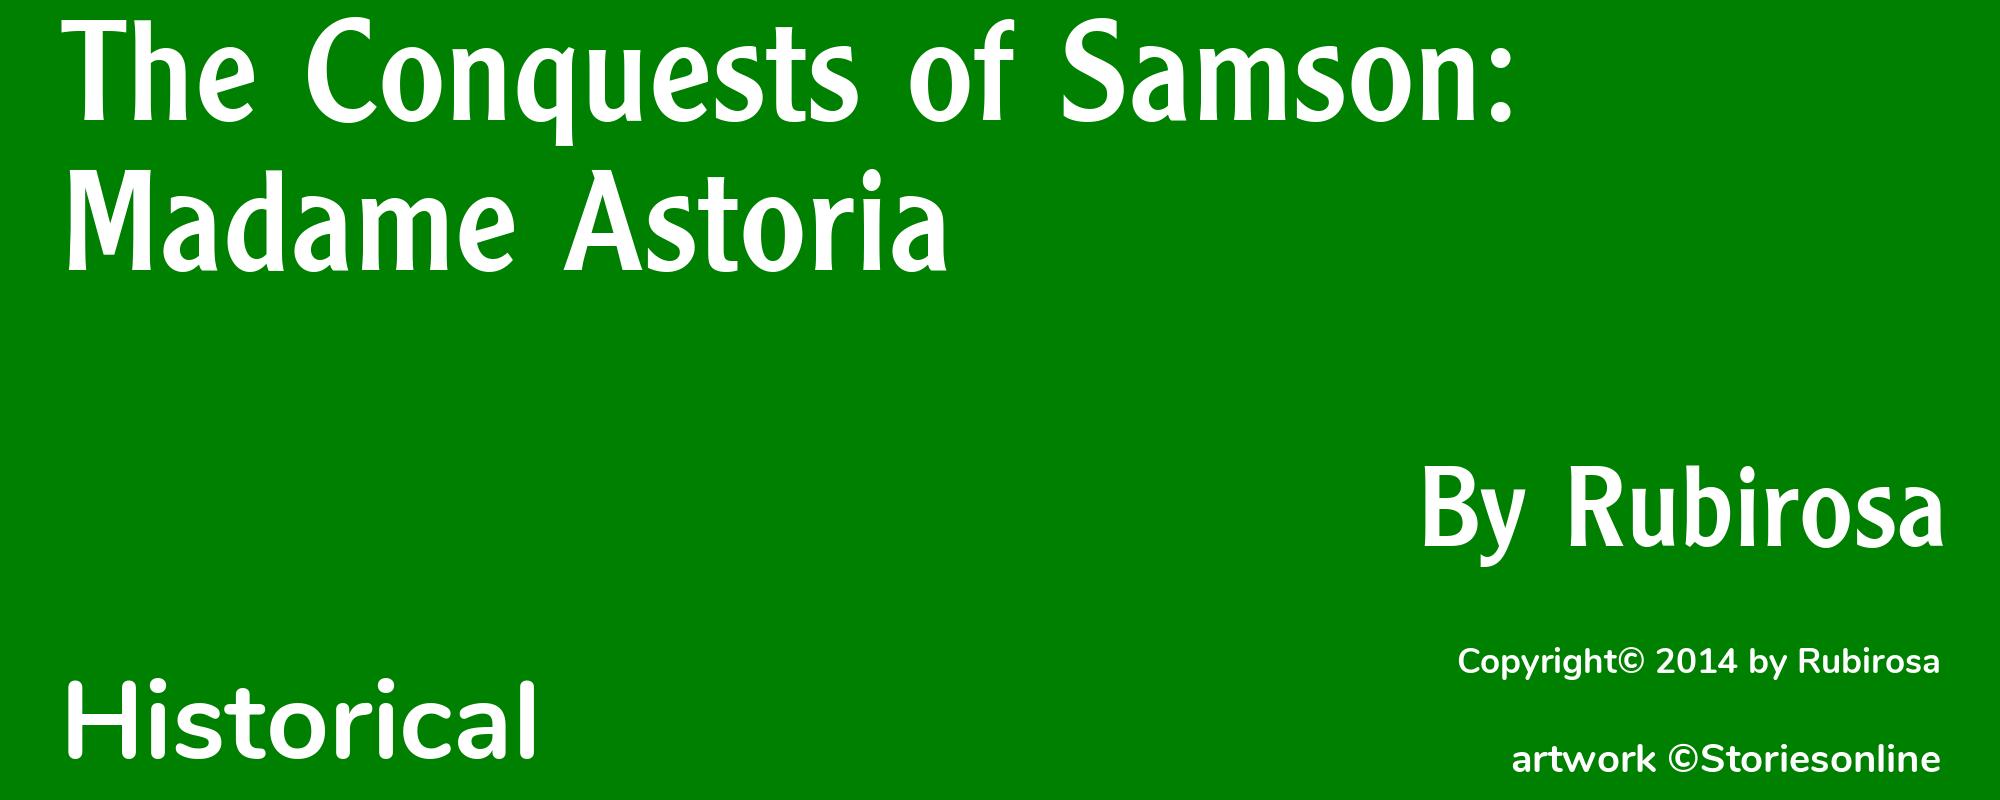 The Conquests of Samson: Madame Astoria - Cover